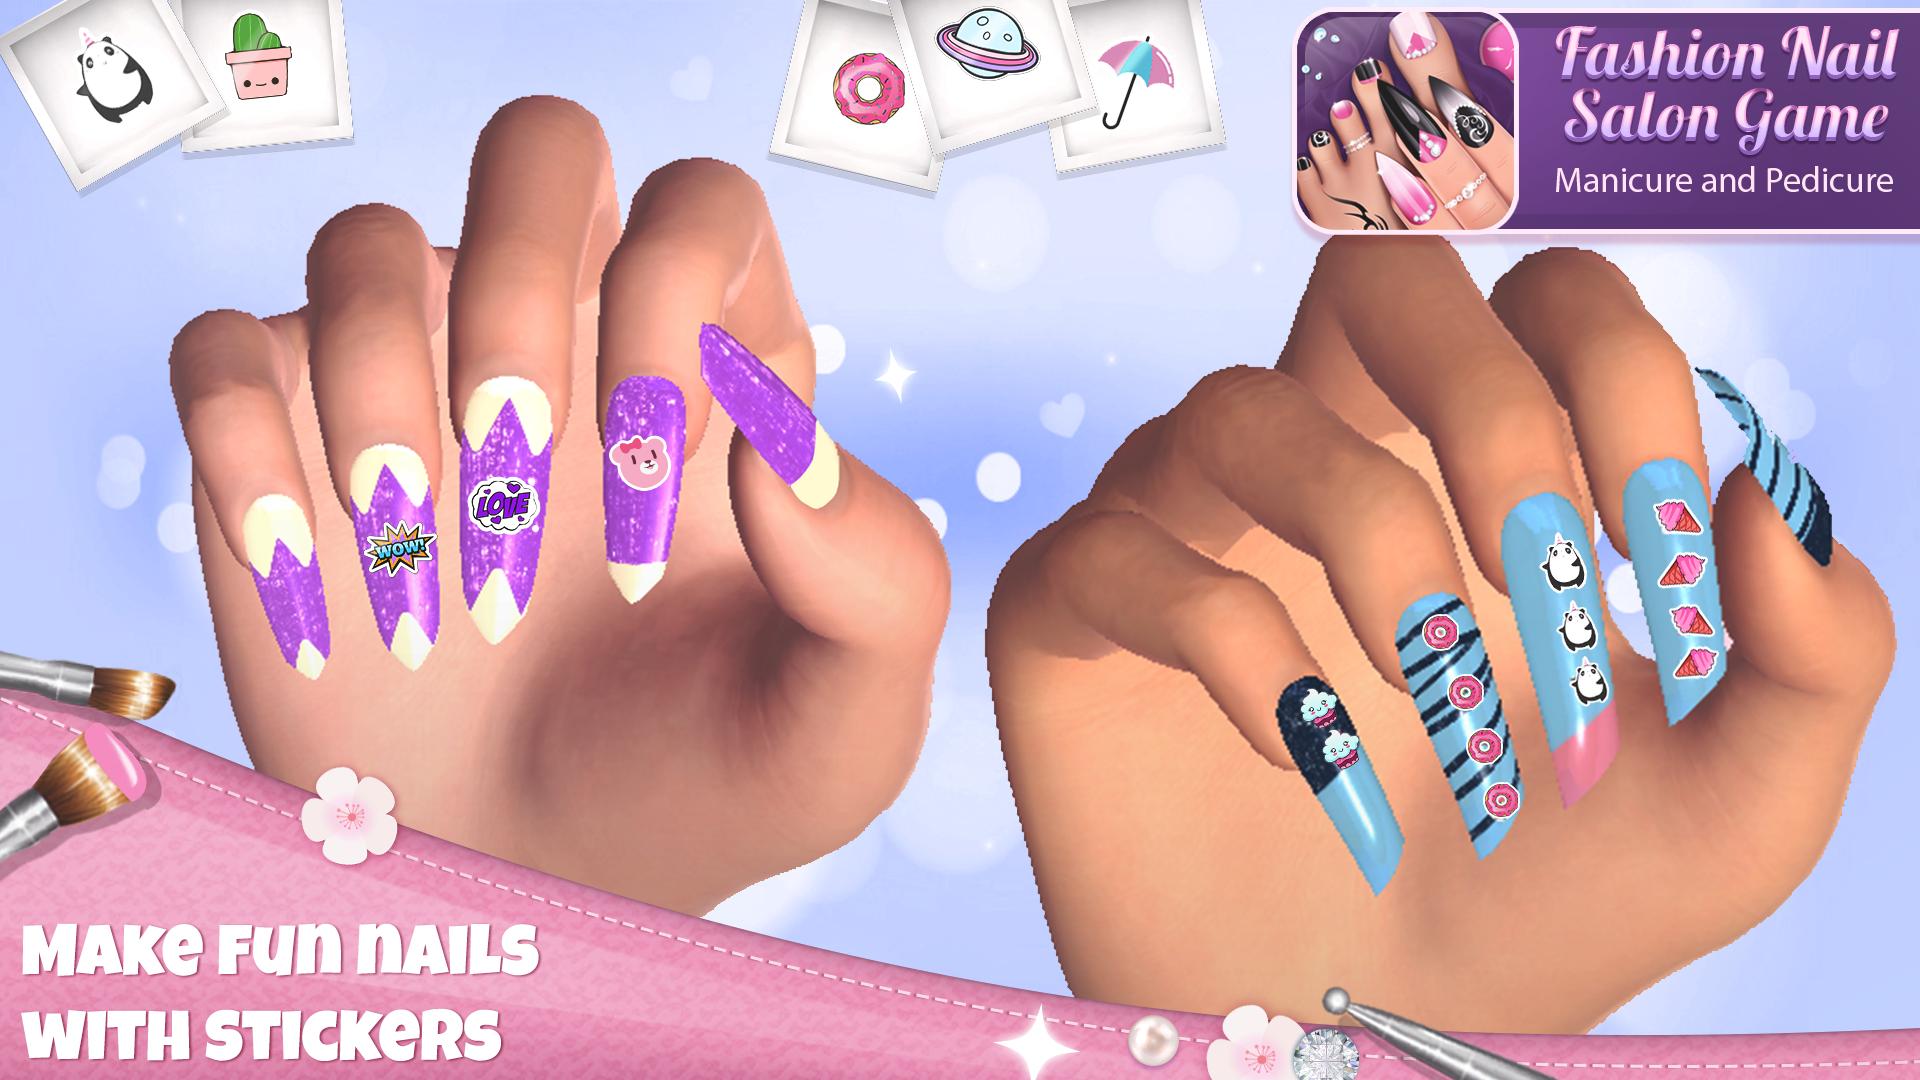 Fashion Nail Salon Game: Manicure and Pedicure App 1.1.1 Screenshot 5